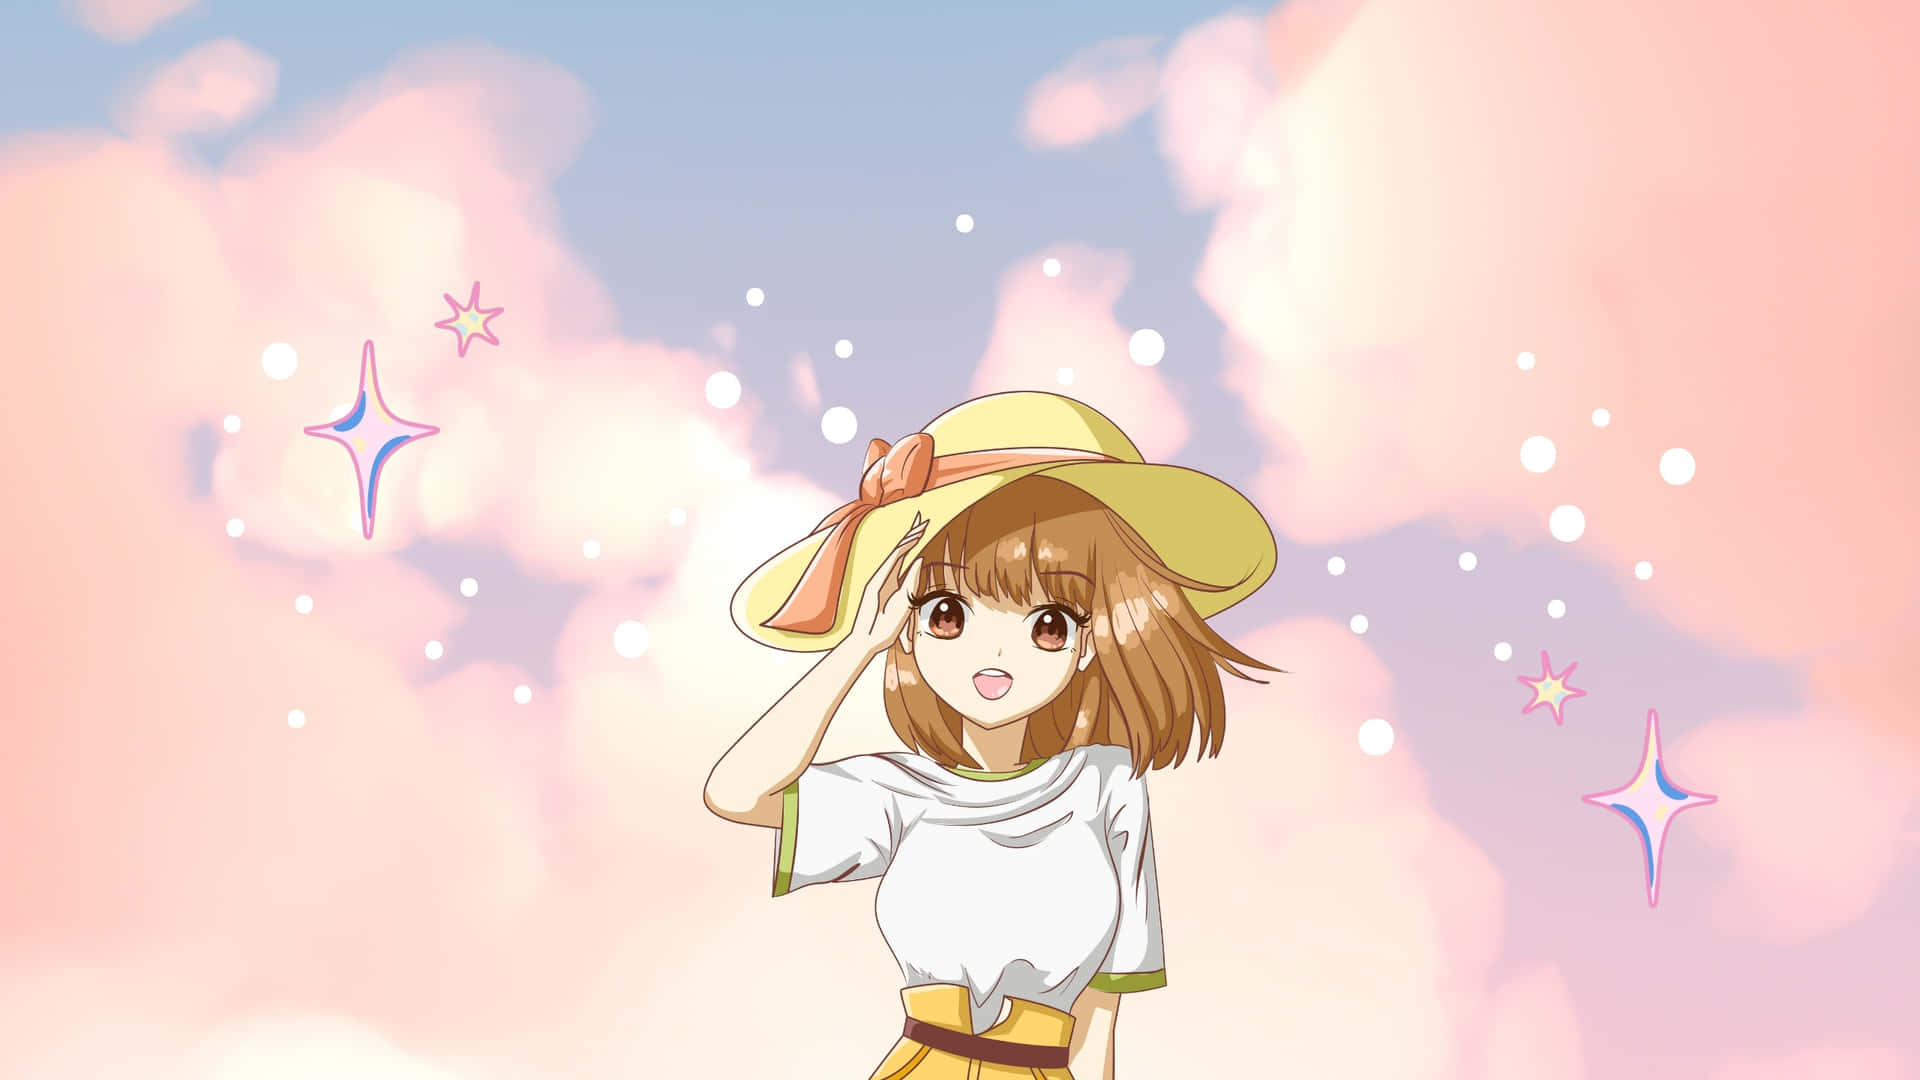 Preppy Girl Anime Style Sparkling Background Wallpaper